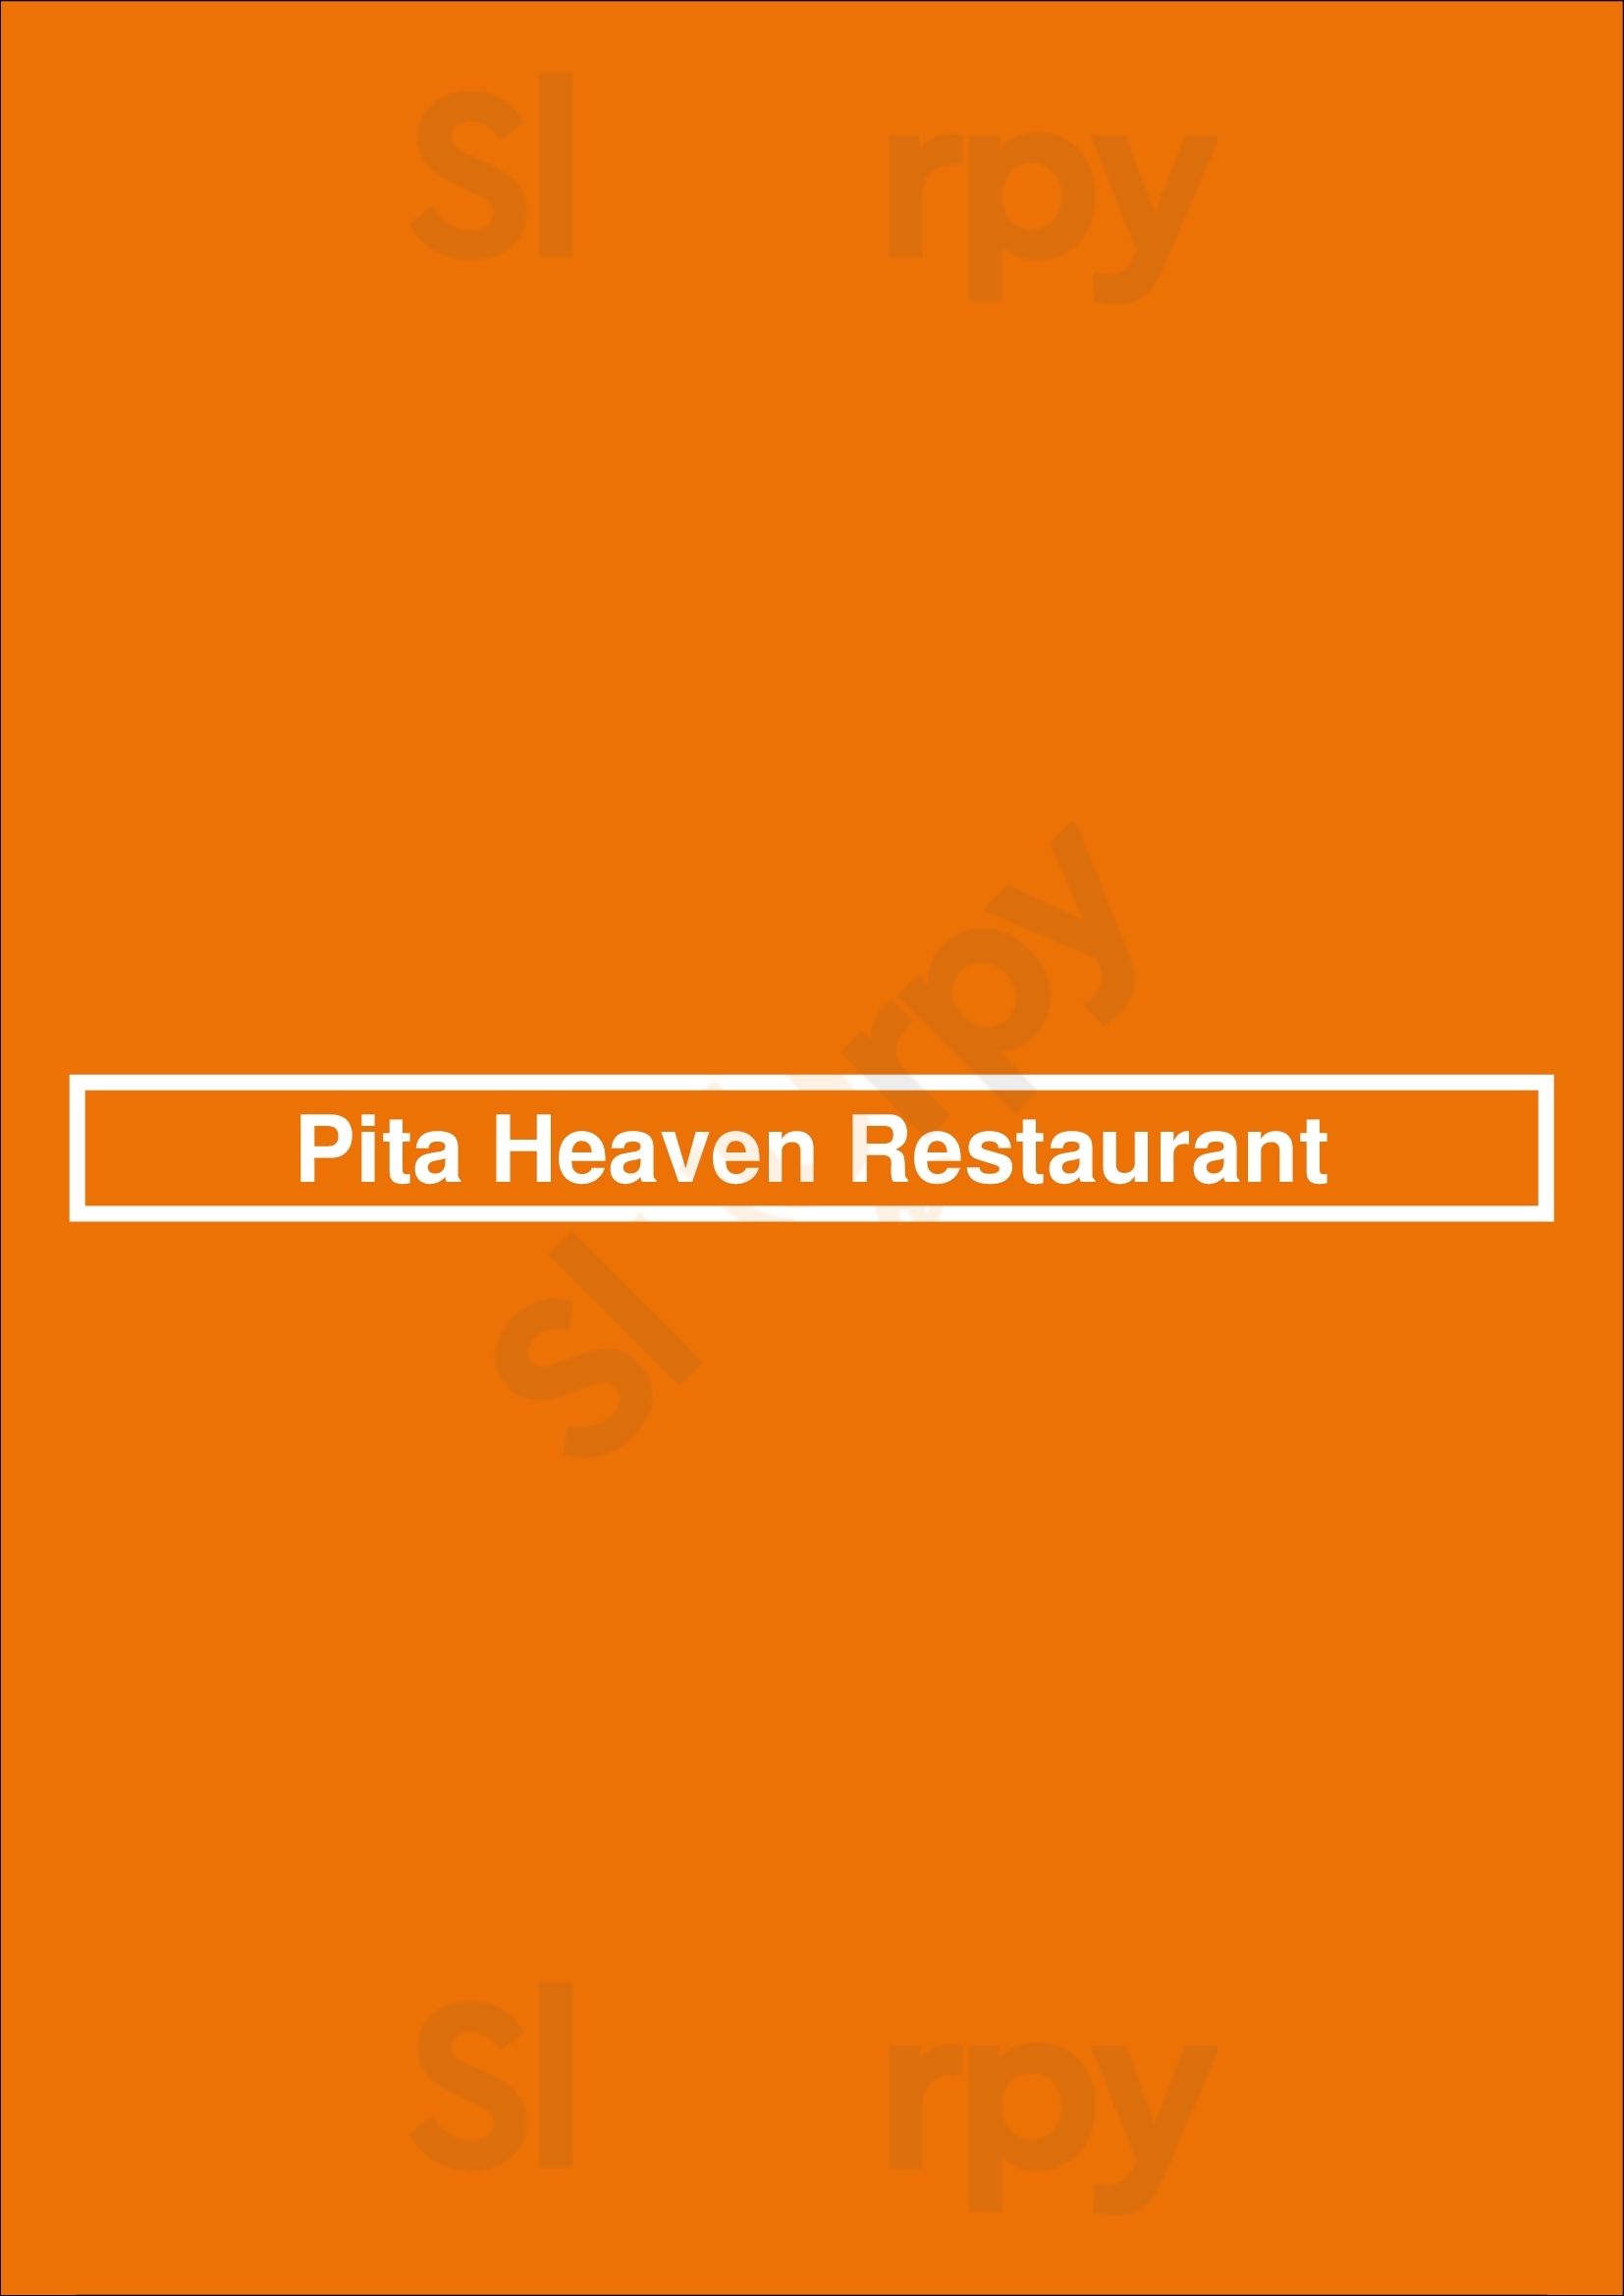 Pita Heaven Restaurant Chicago Menu - 1